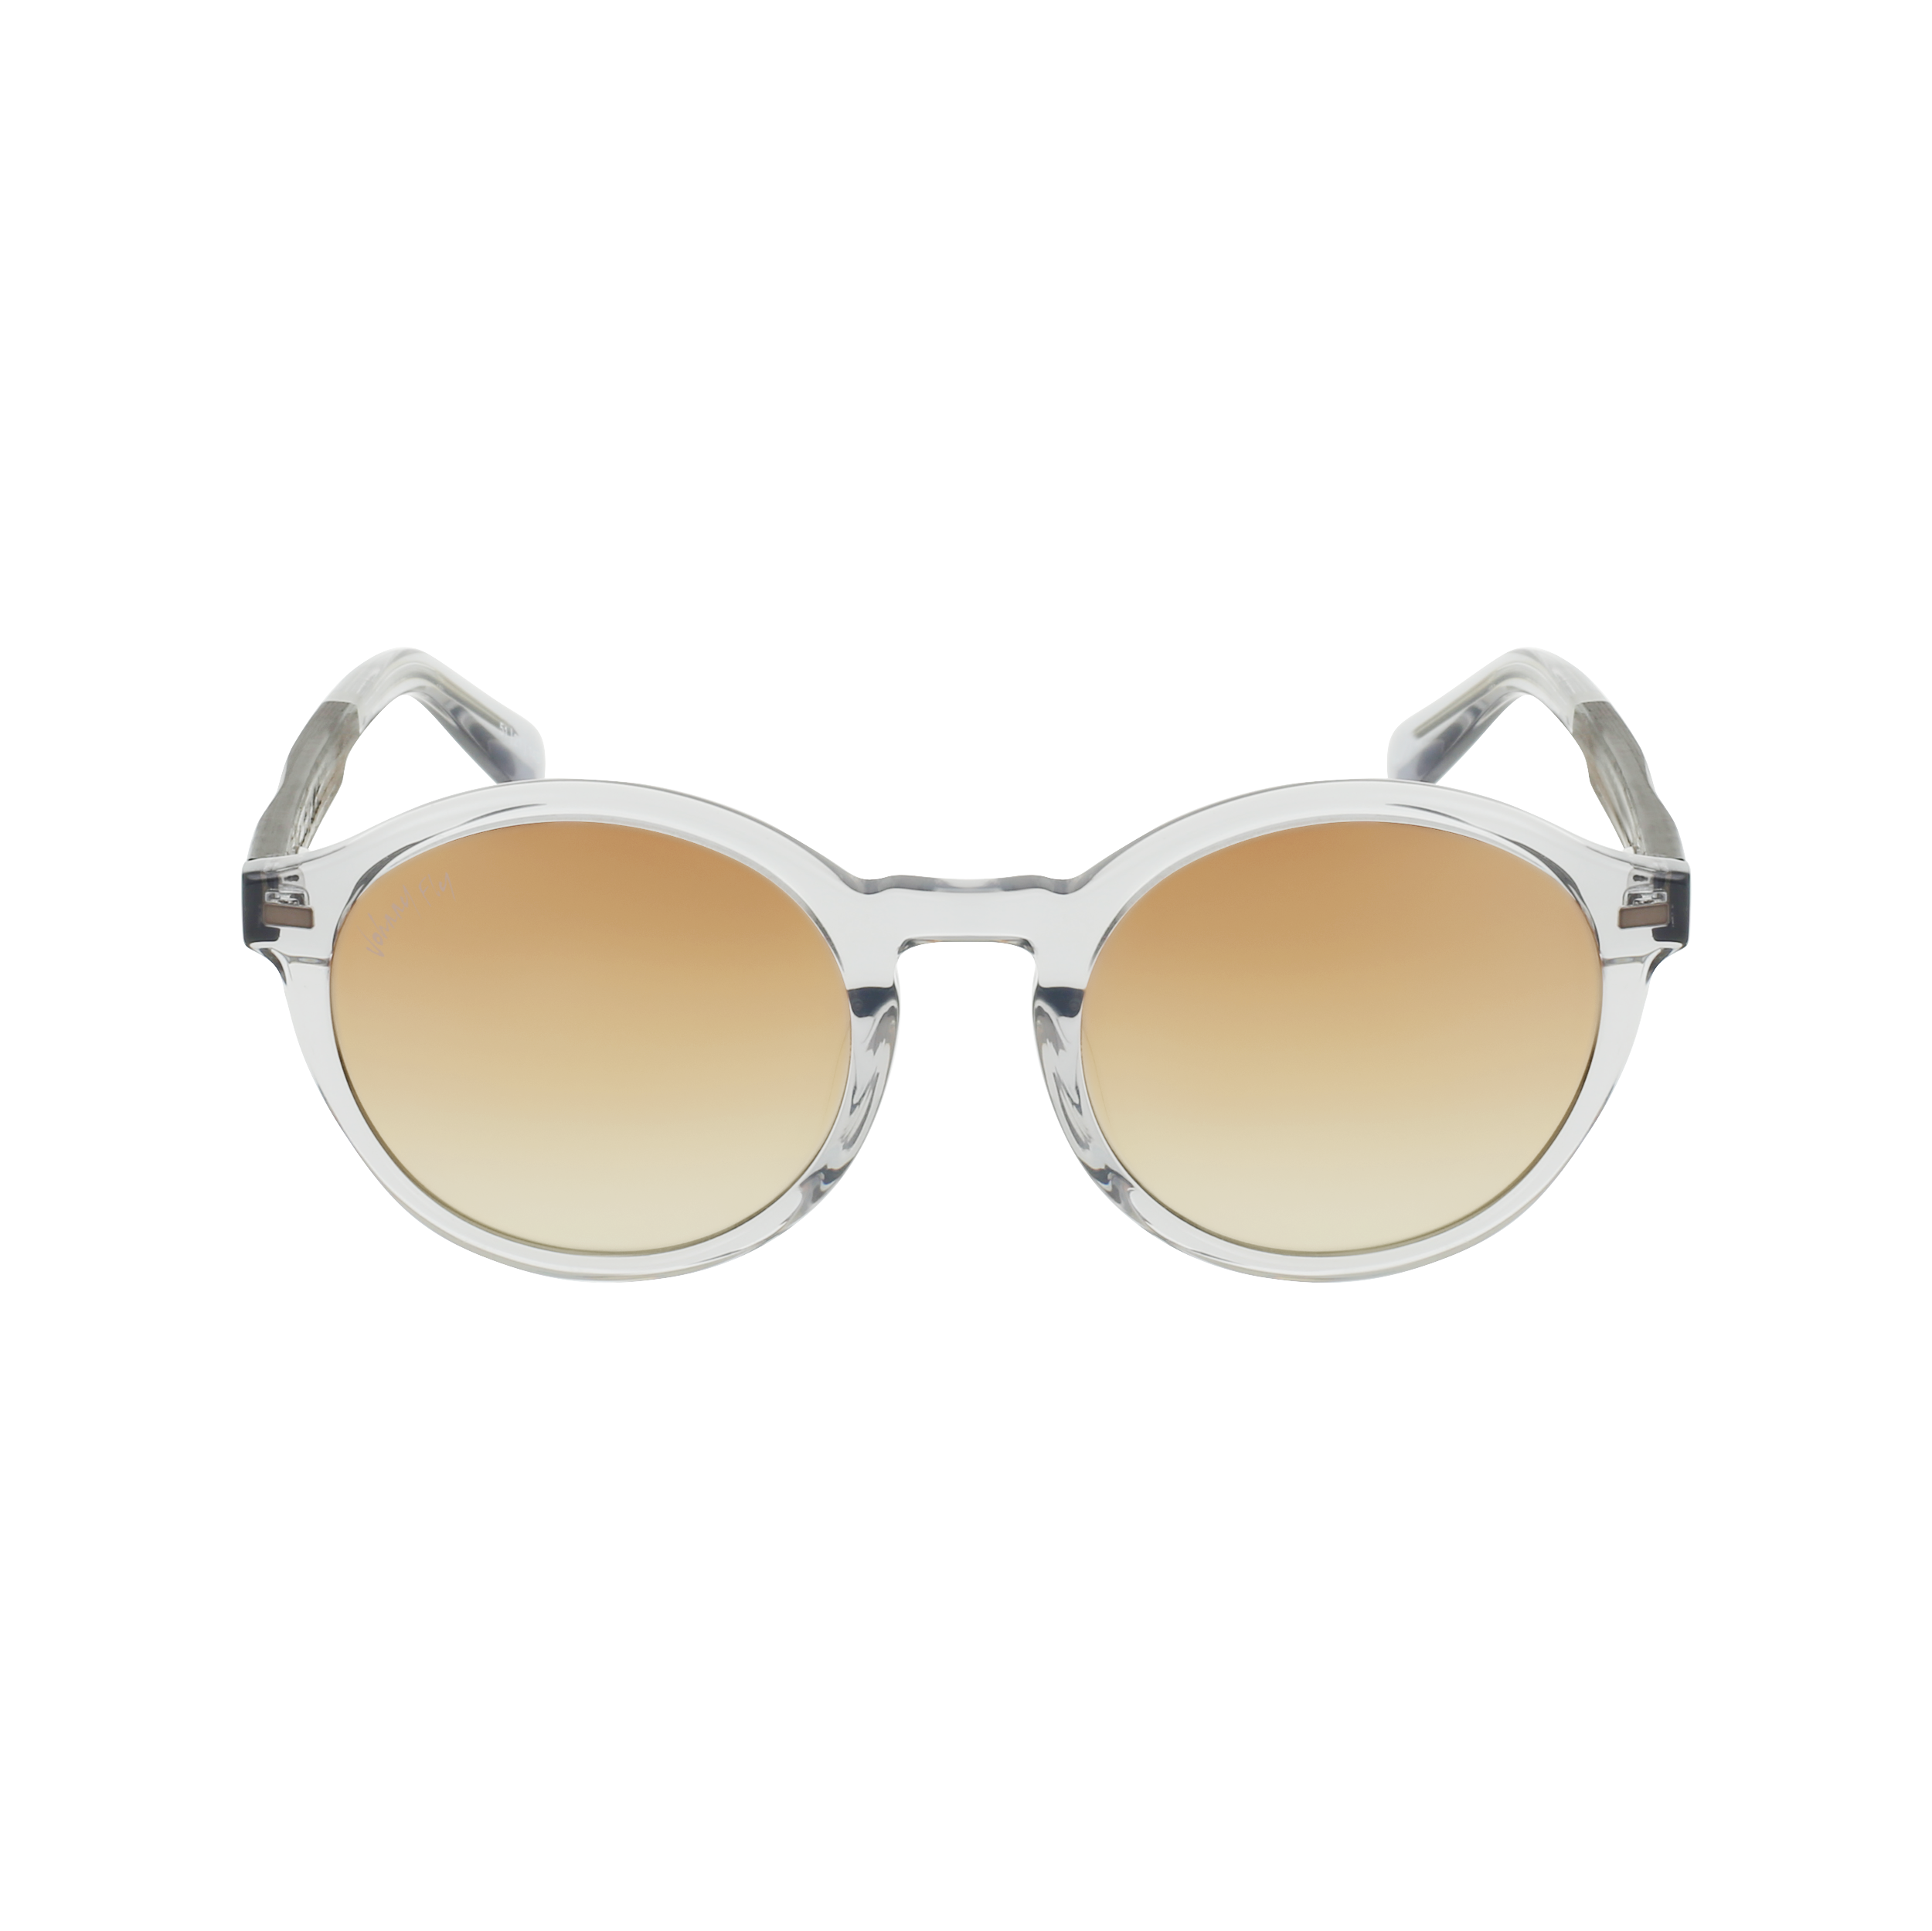 UFO Sunglasses Frame - Tinted Crystal- Johnny Fly | UFO-TCRY-REF-GLDGR | | 